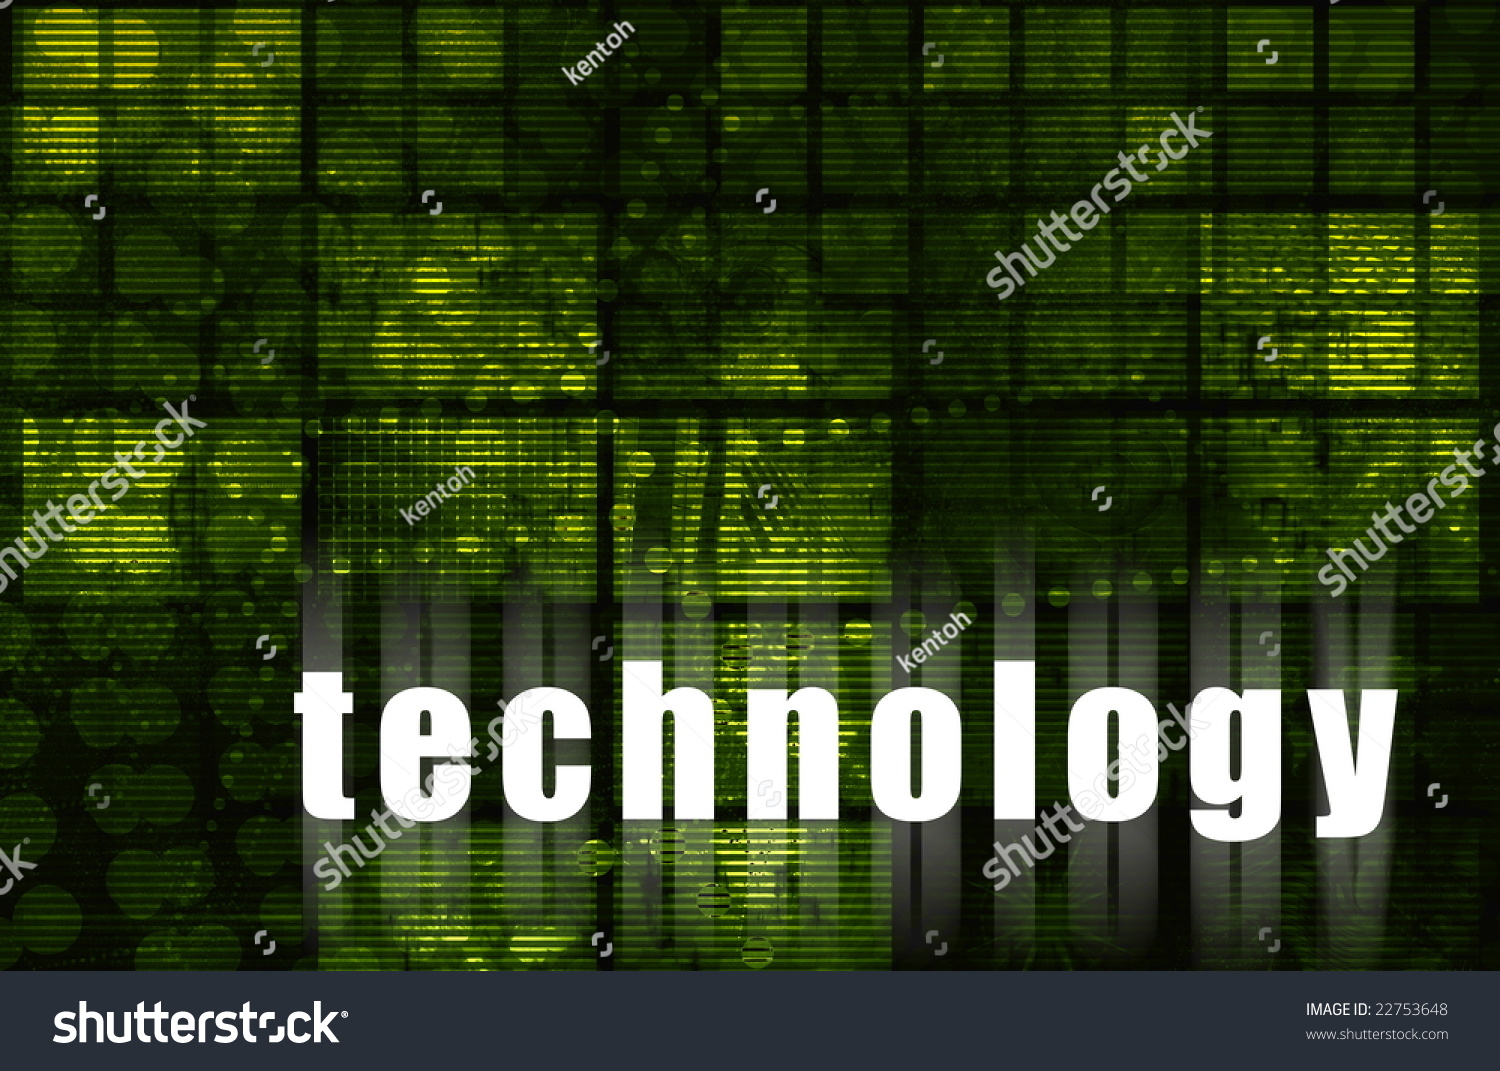 green technology clipart - photo #15